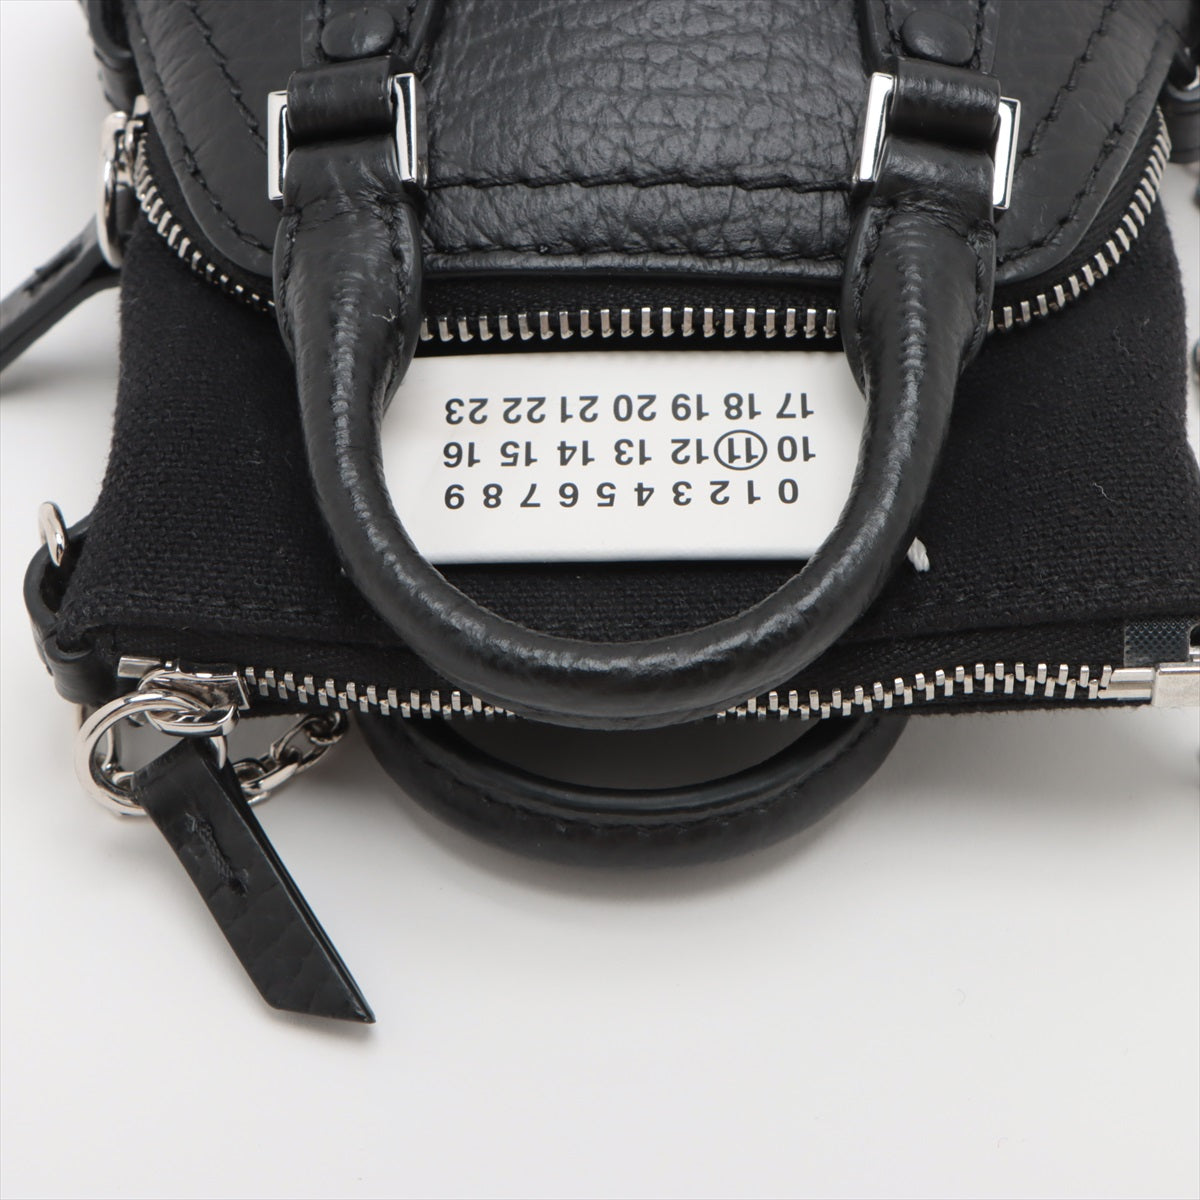 Meson Margiela 5AC Ba Canvas  Leather Shoulder Bag Black